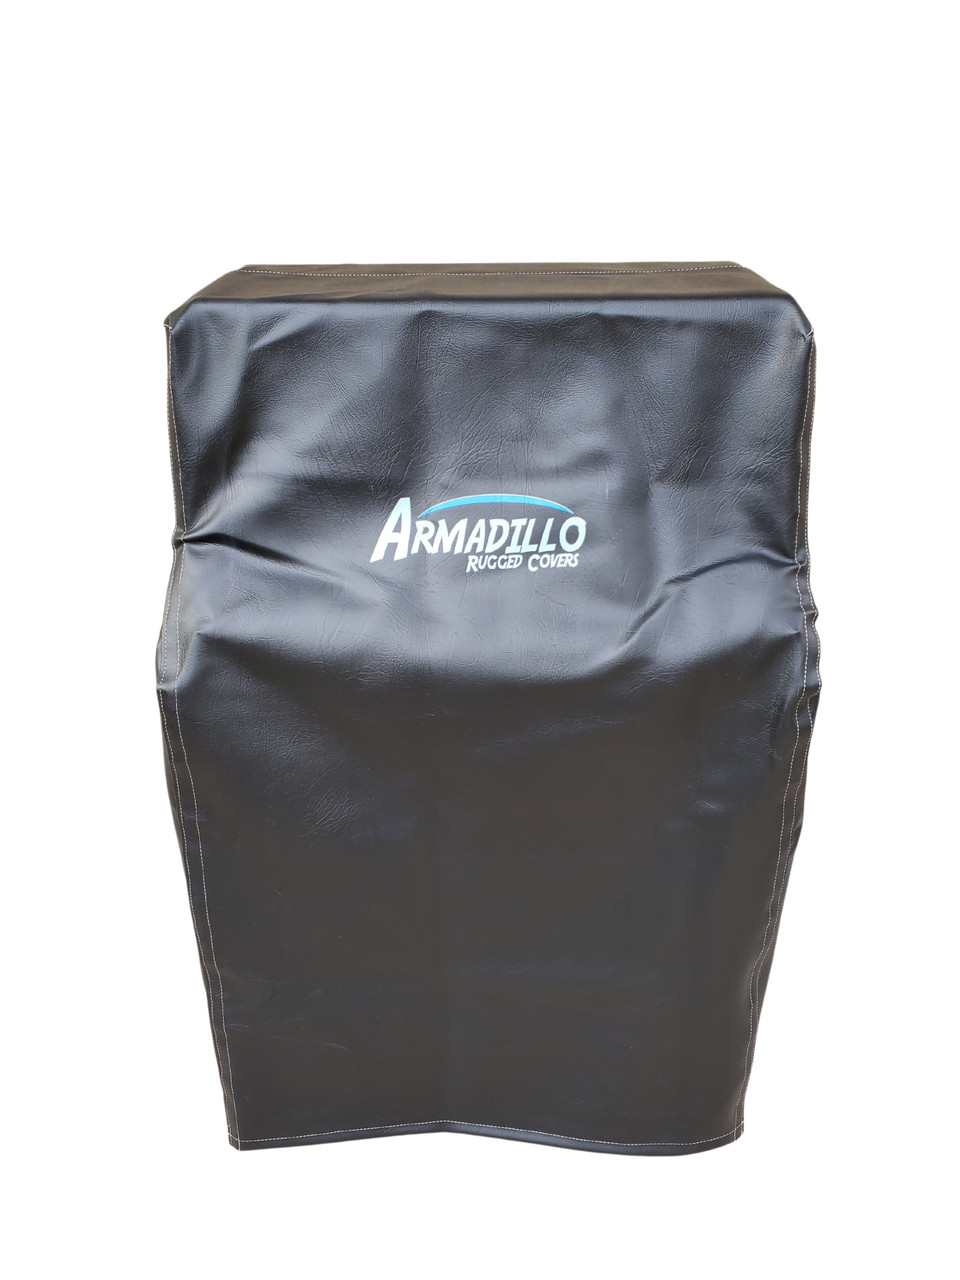 Armadillo Winterlux custom two tier tool box cover